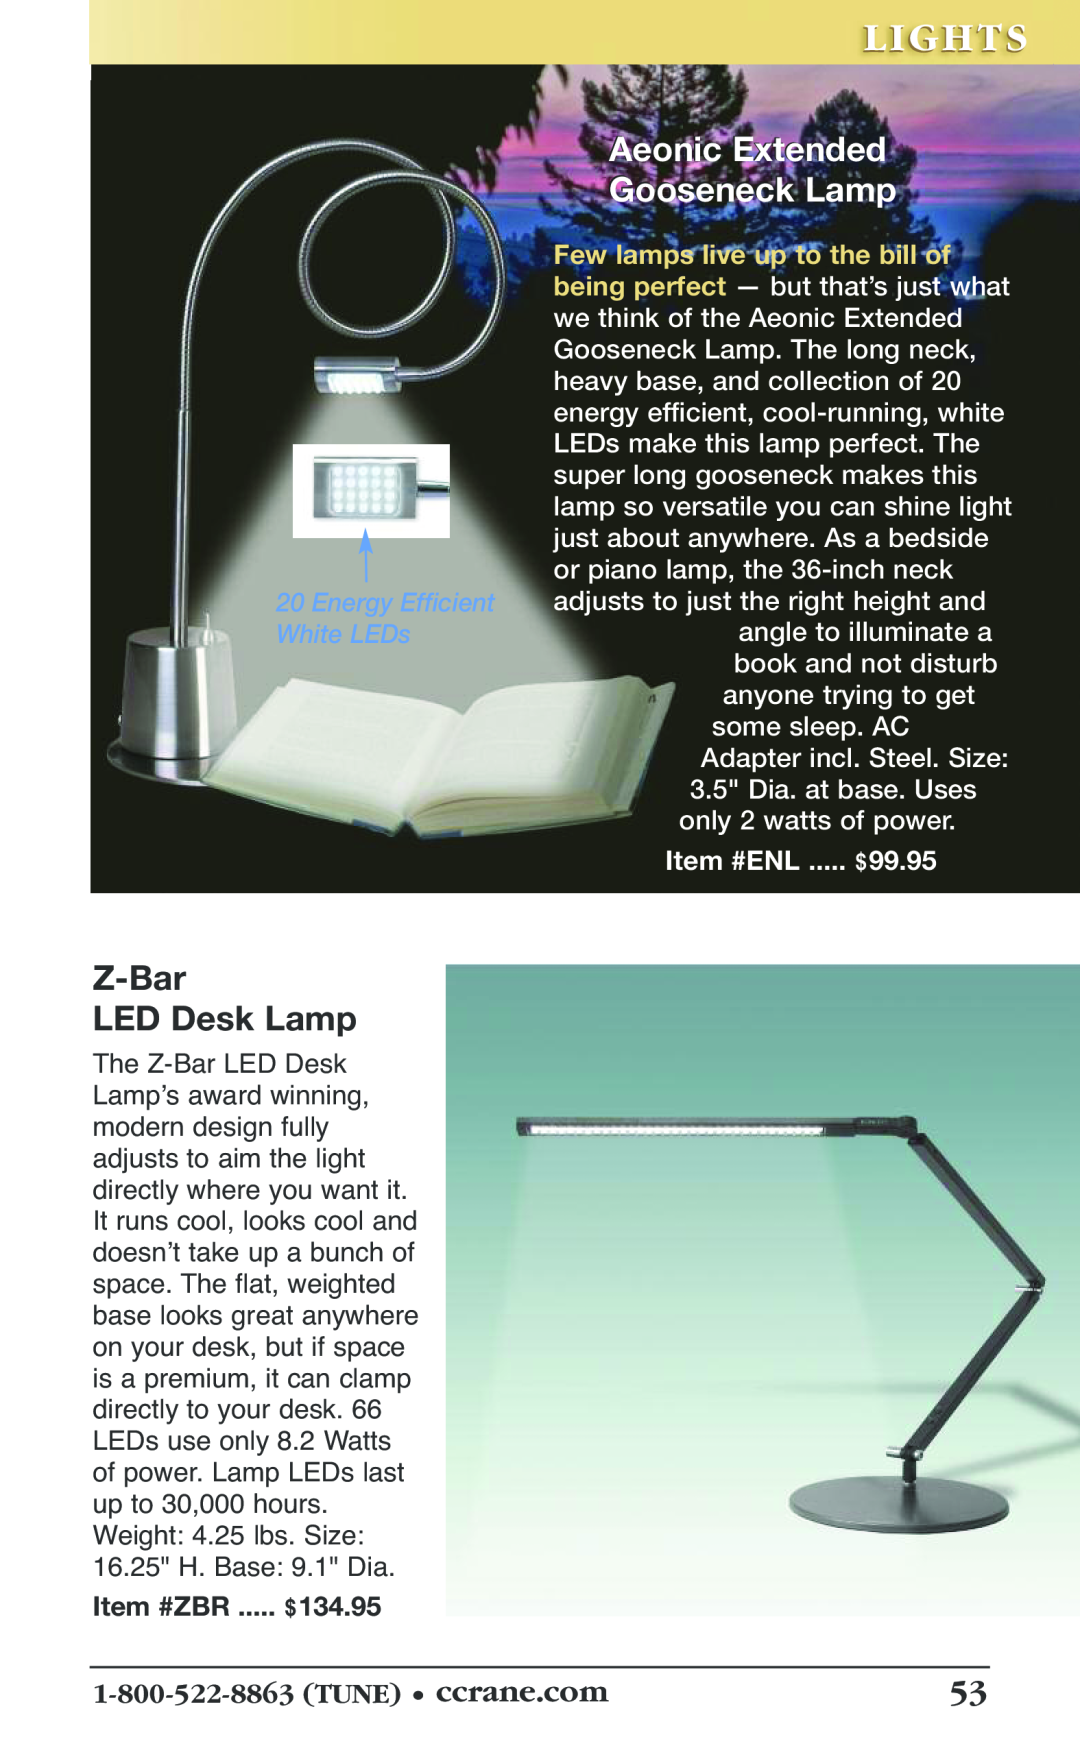 C. Crane 19f manual Lights, Z-Bar LED Desk Lamp, Aeonic Extended Gooseneck Lamp, Item #ZBR, $134.95, $99.95 